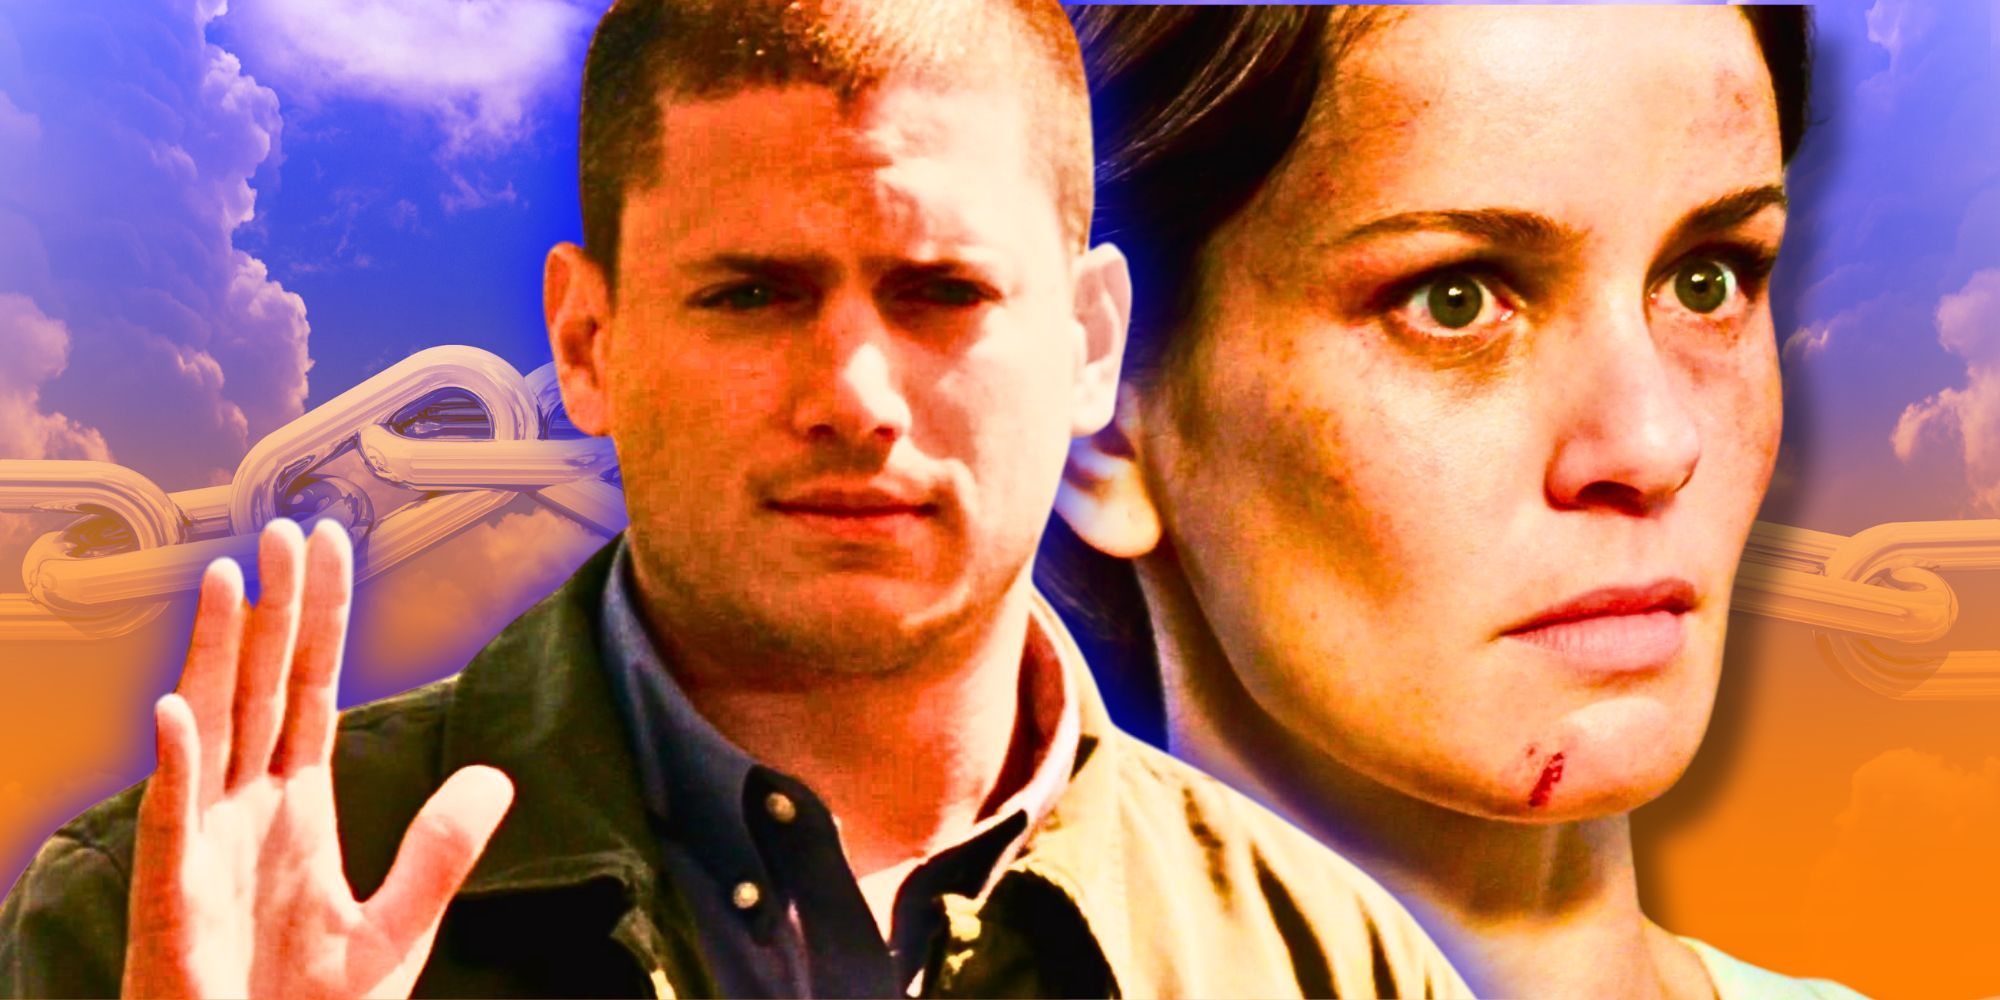 Wentworth Miller as Michael Scofield and Sarah Wayne Callies as Sara Tancredi in Prison Break.